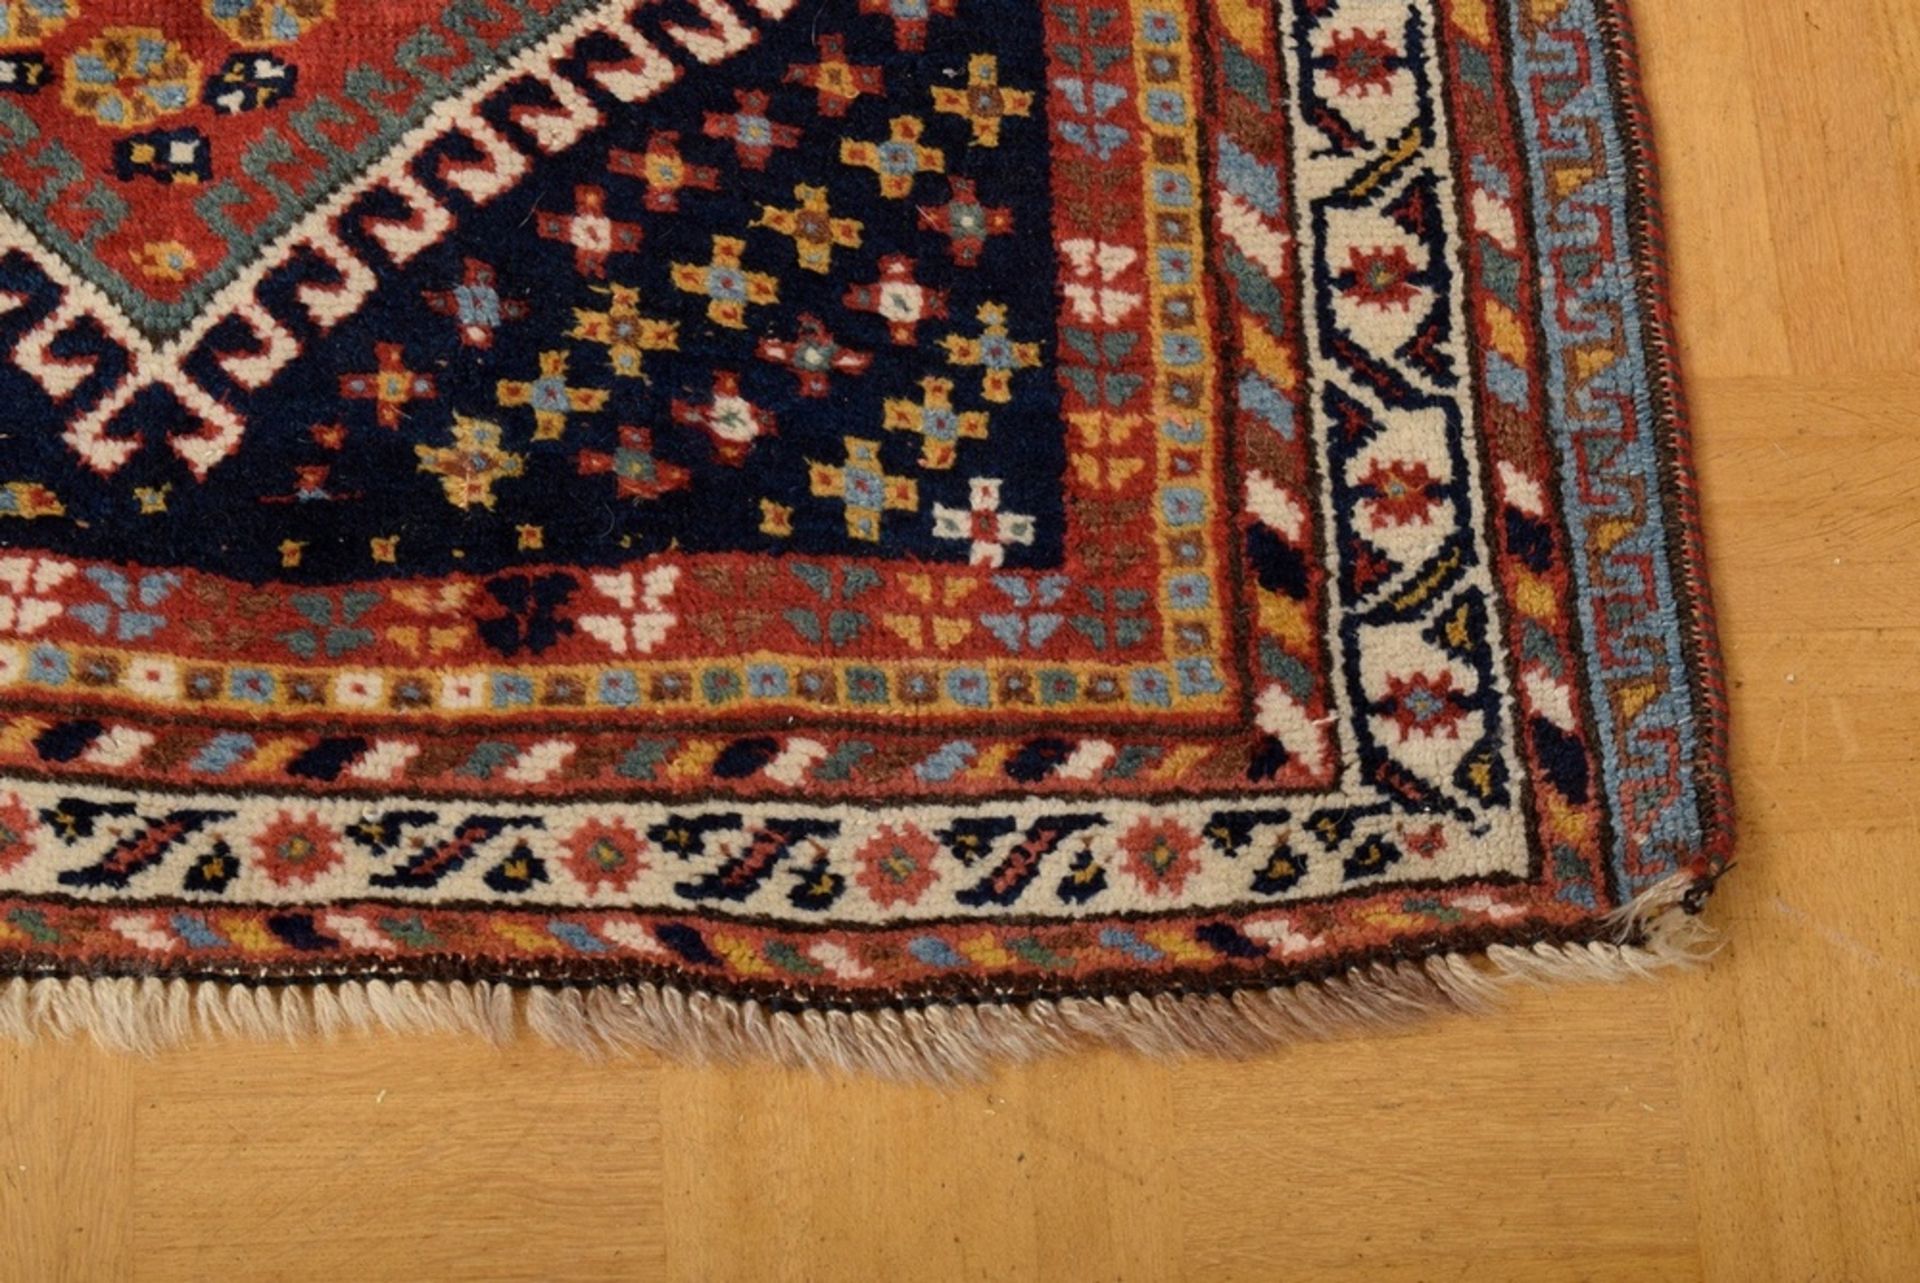 Luri Teppich mit Rapport roter und nachtblauer R | A Luri carpet with a rapport of red and midnight - Bild 4 aus 8